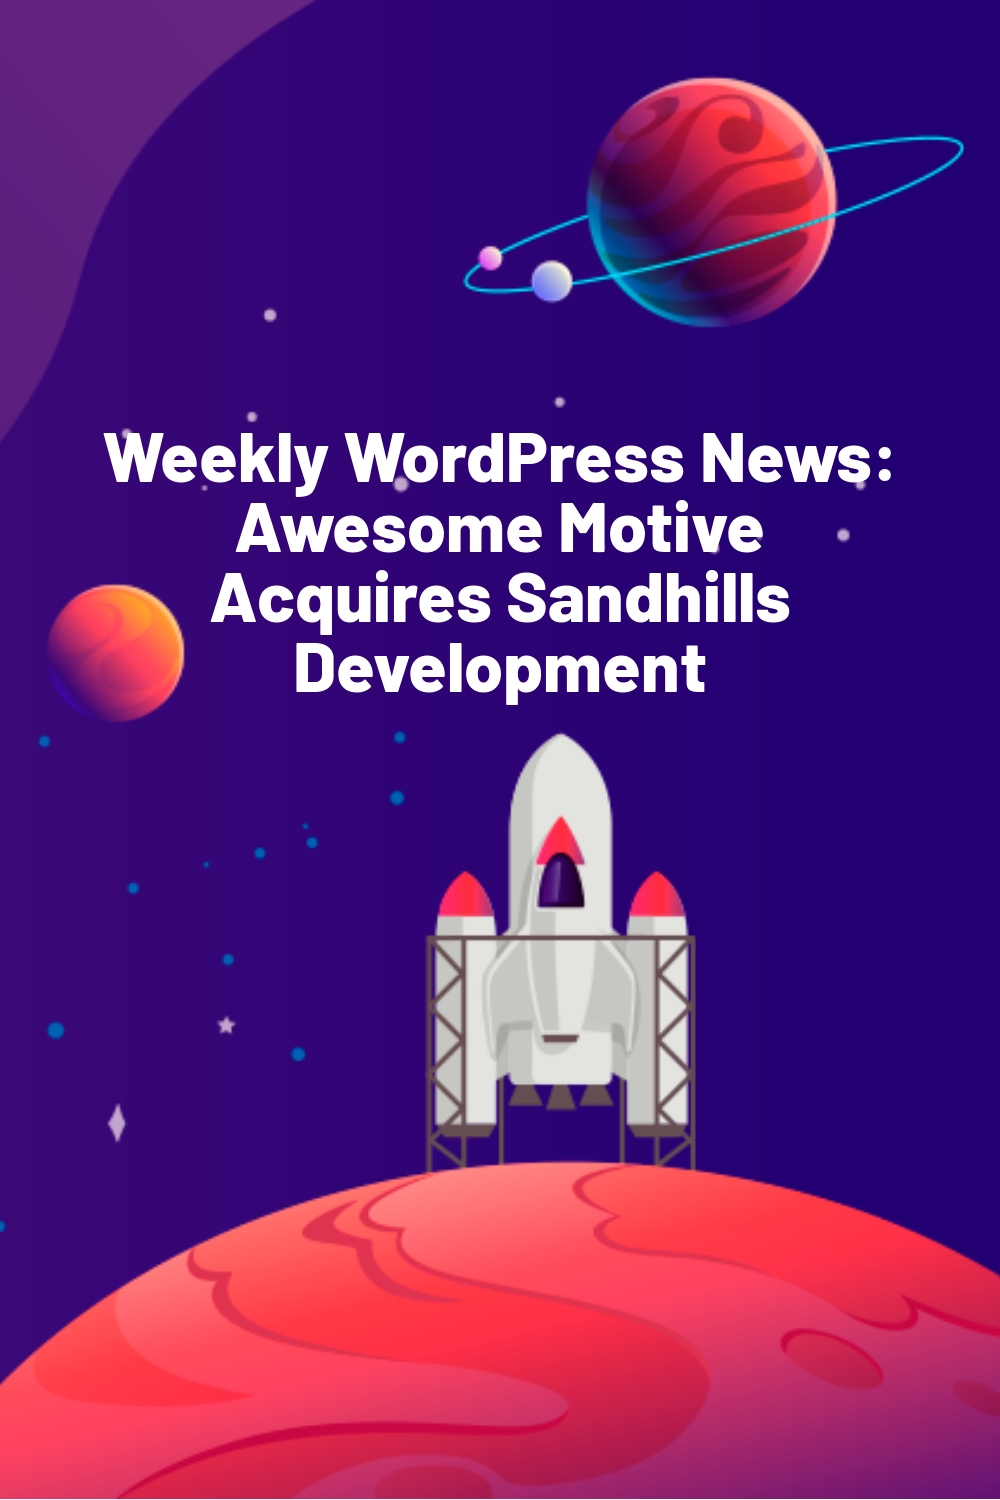 Weekly WordPress News: Awesome Motive Acquires Sandhills Development